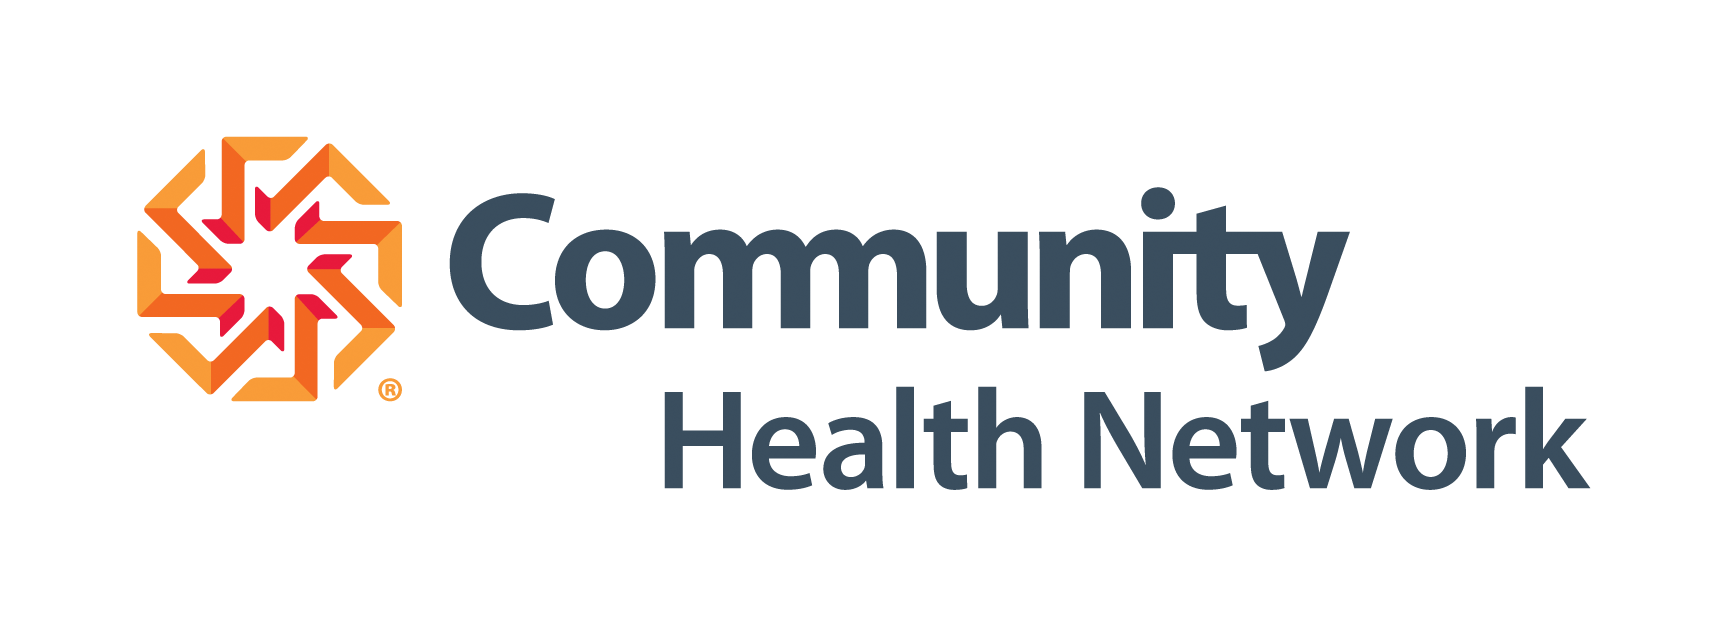 COMMUNITY HEALTH NETWORK